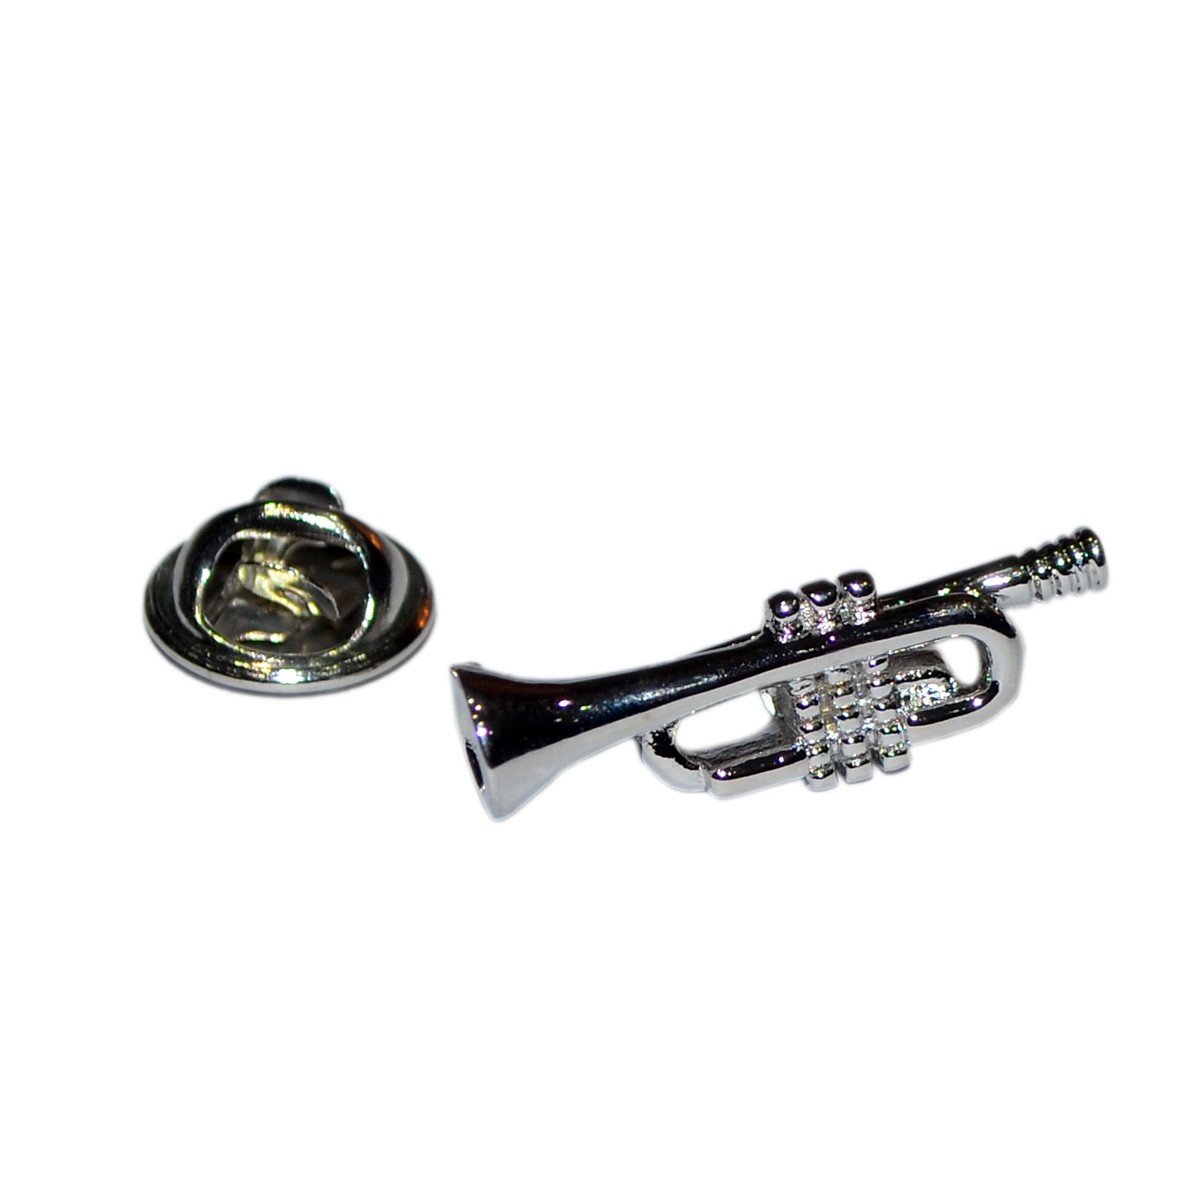 Pin Badge Trumpet Sheet Music Songbook